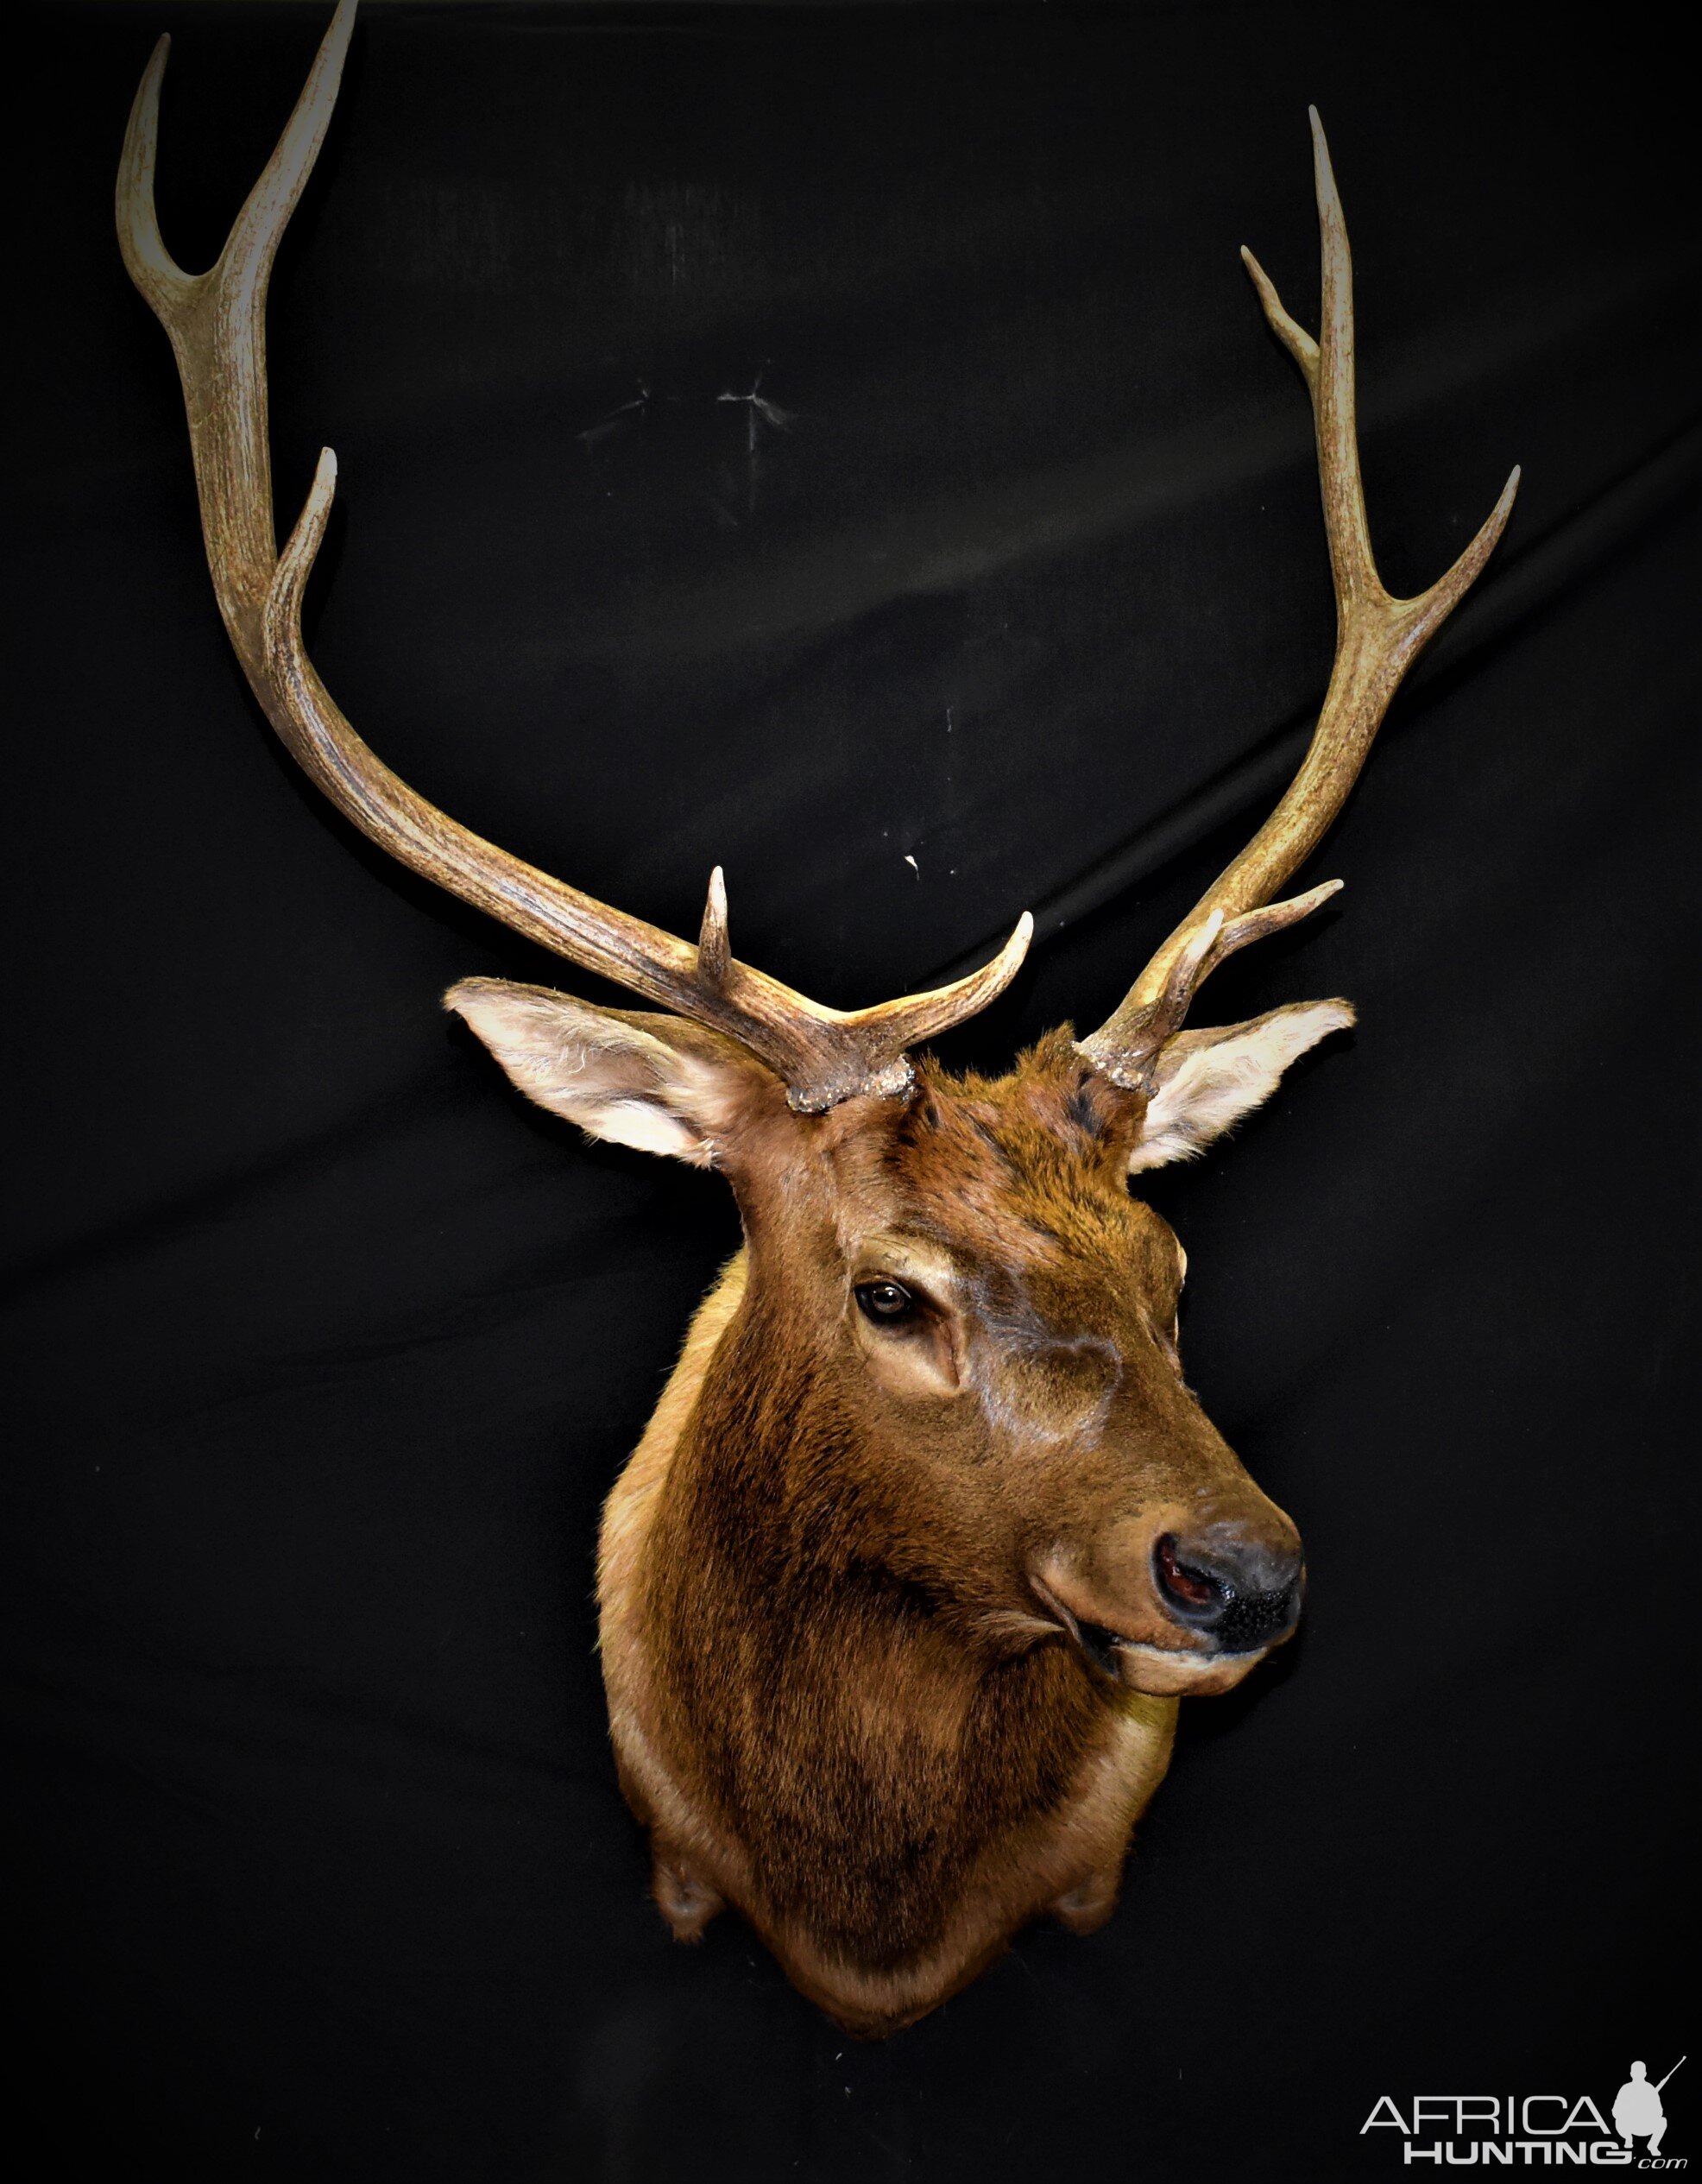 Elk Shoulder Mount Taxidermy